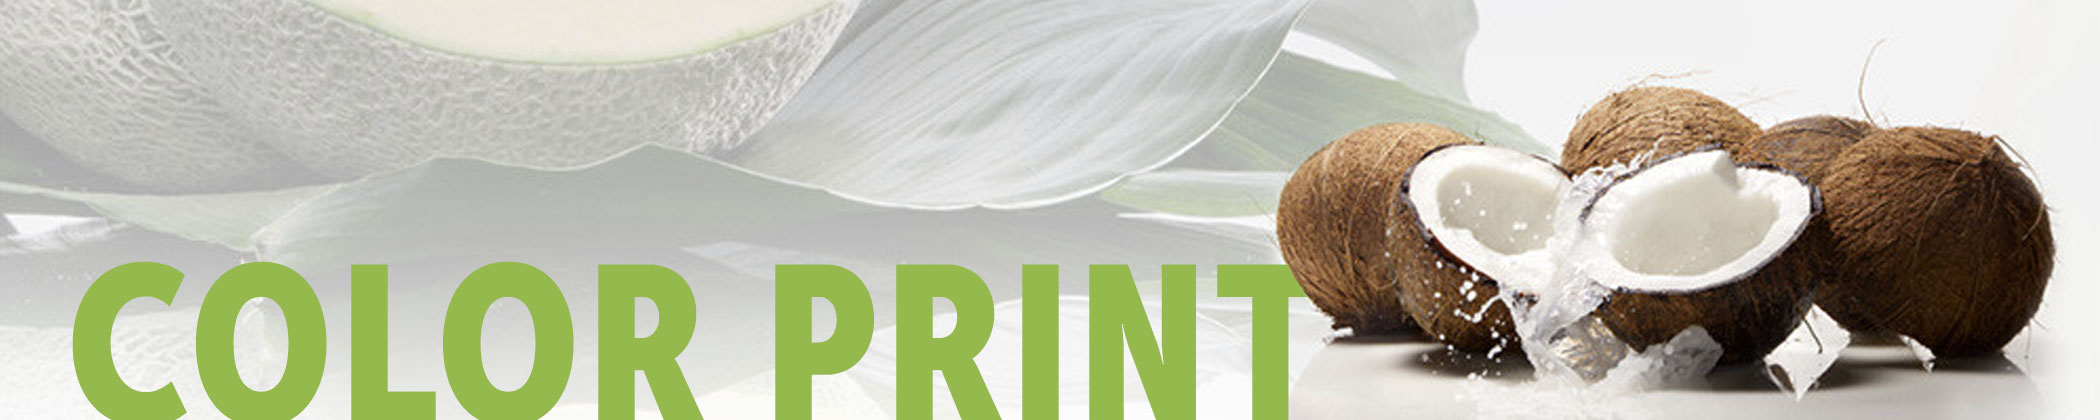 glassprinting header 1 - Color Print